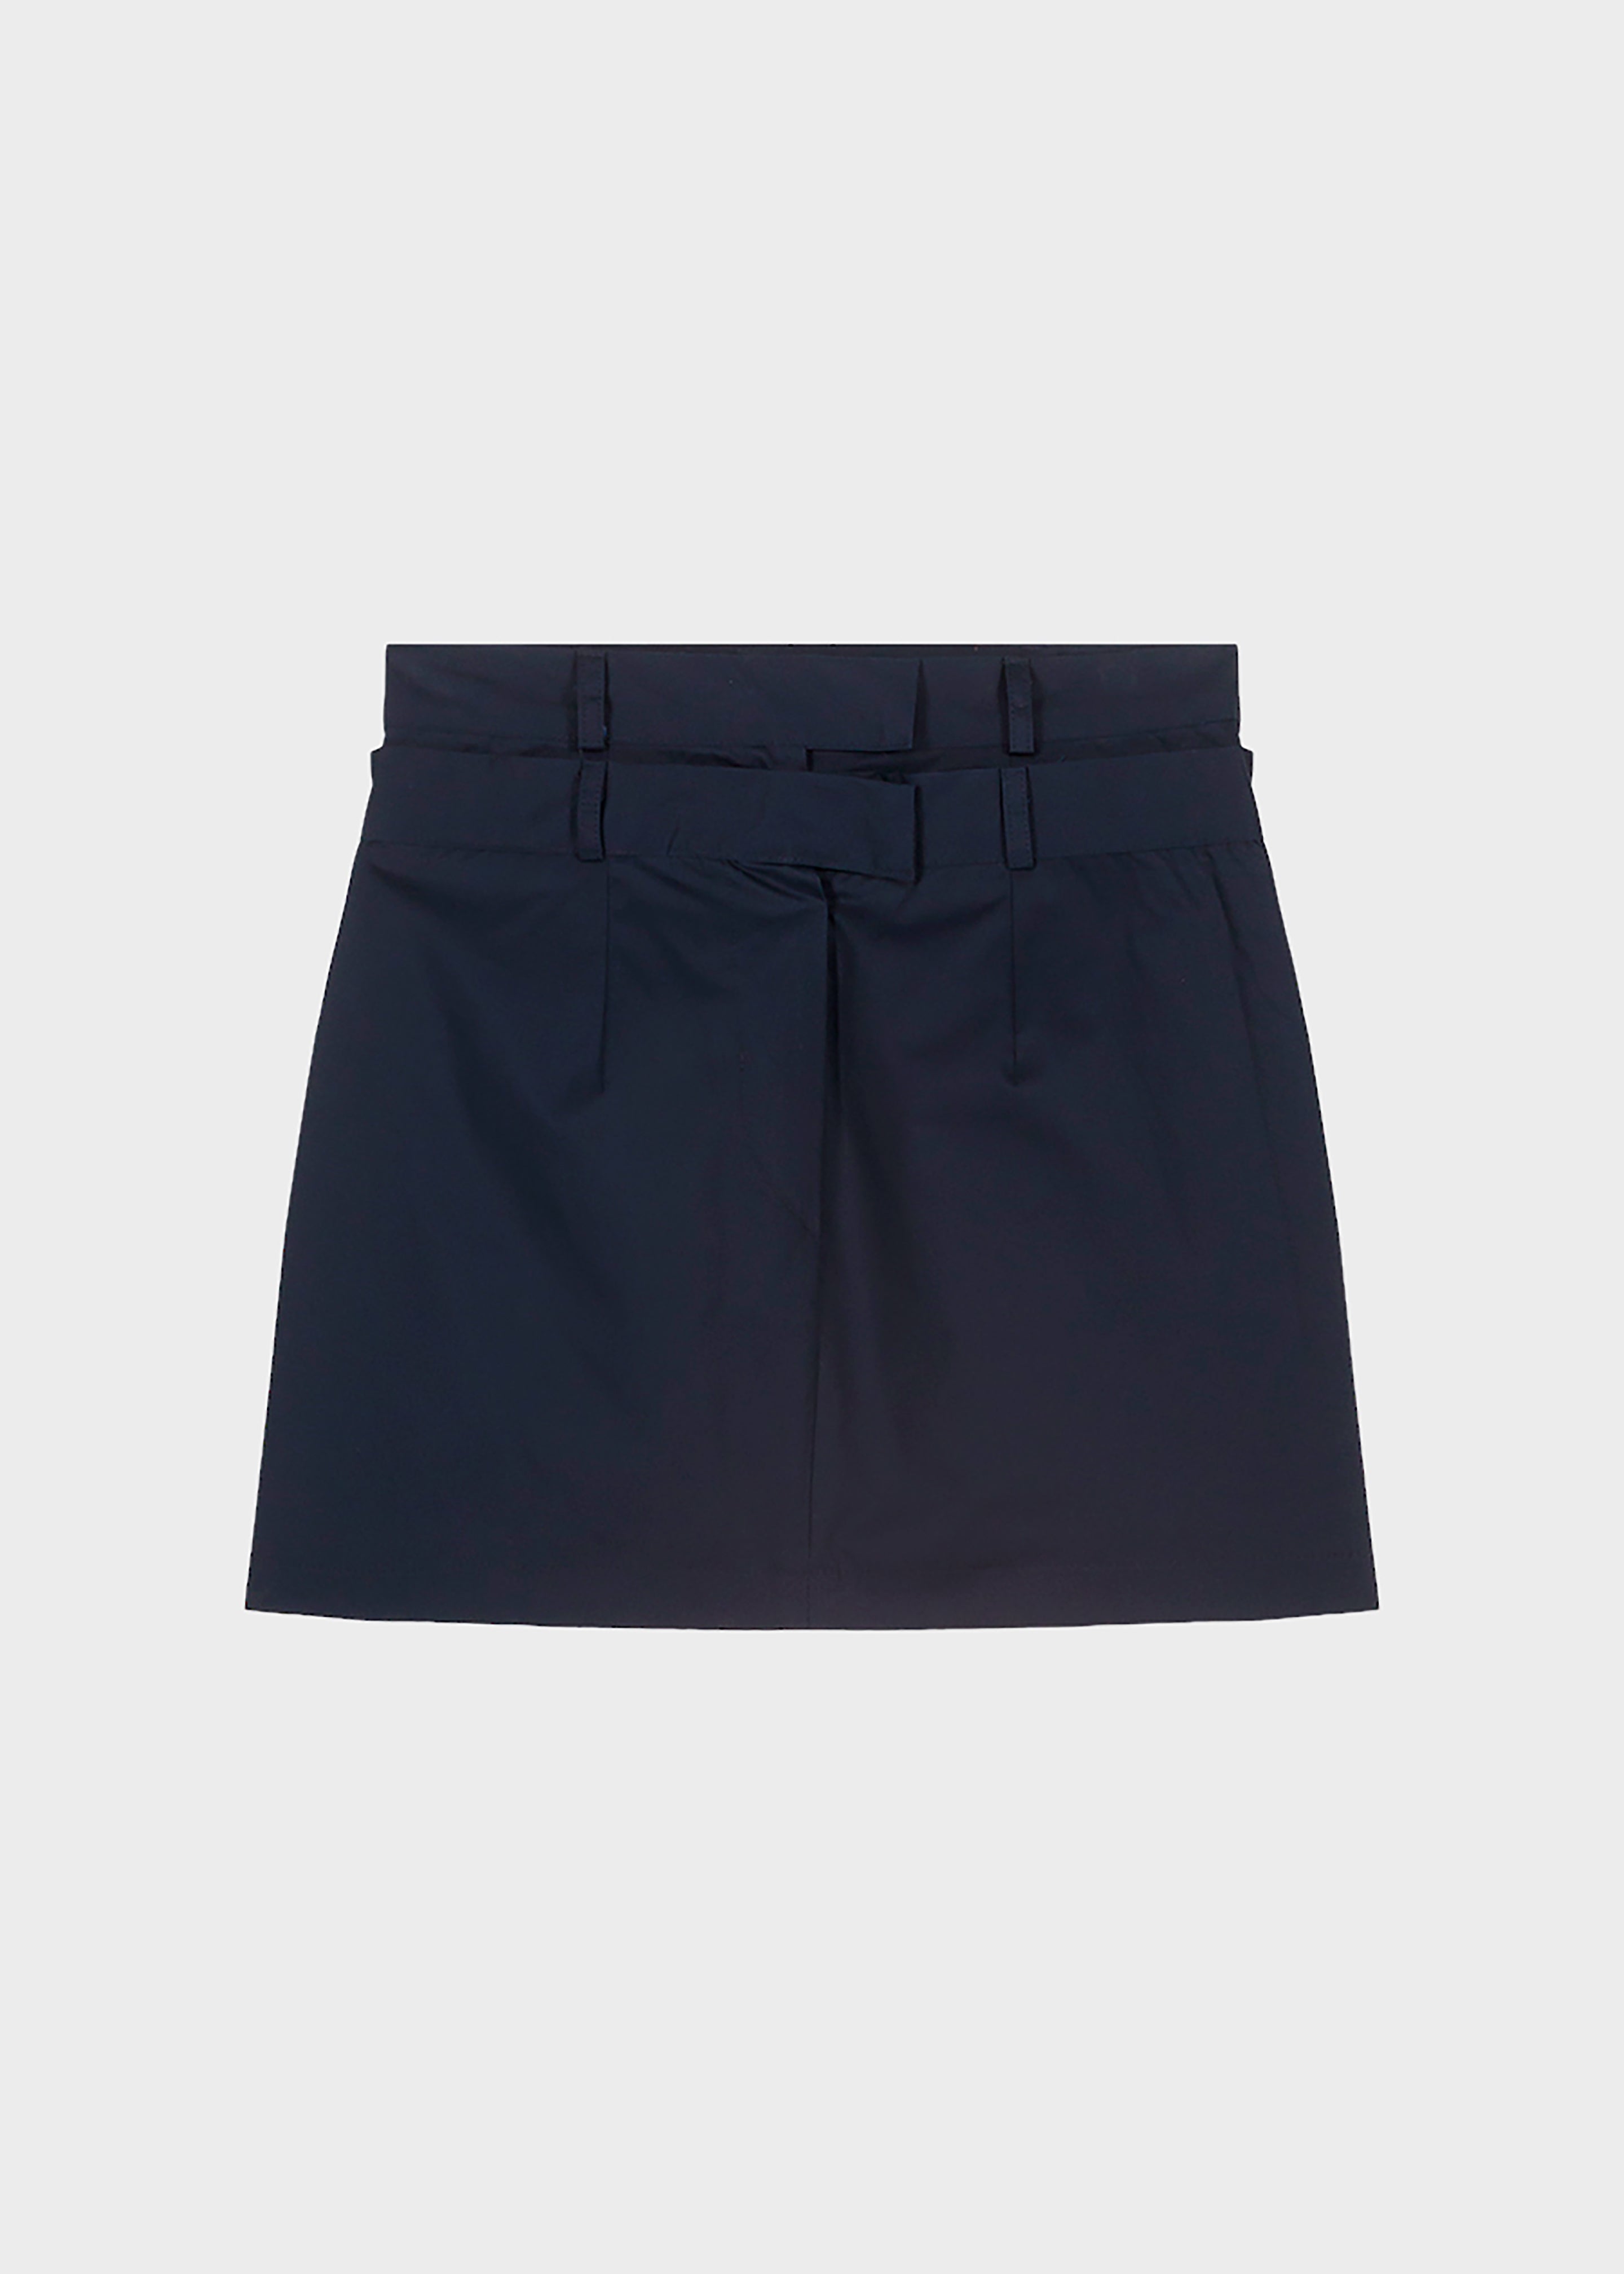 Anita Mini Skirt - Navy - 8